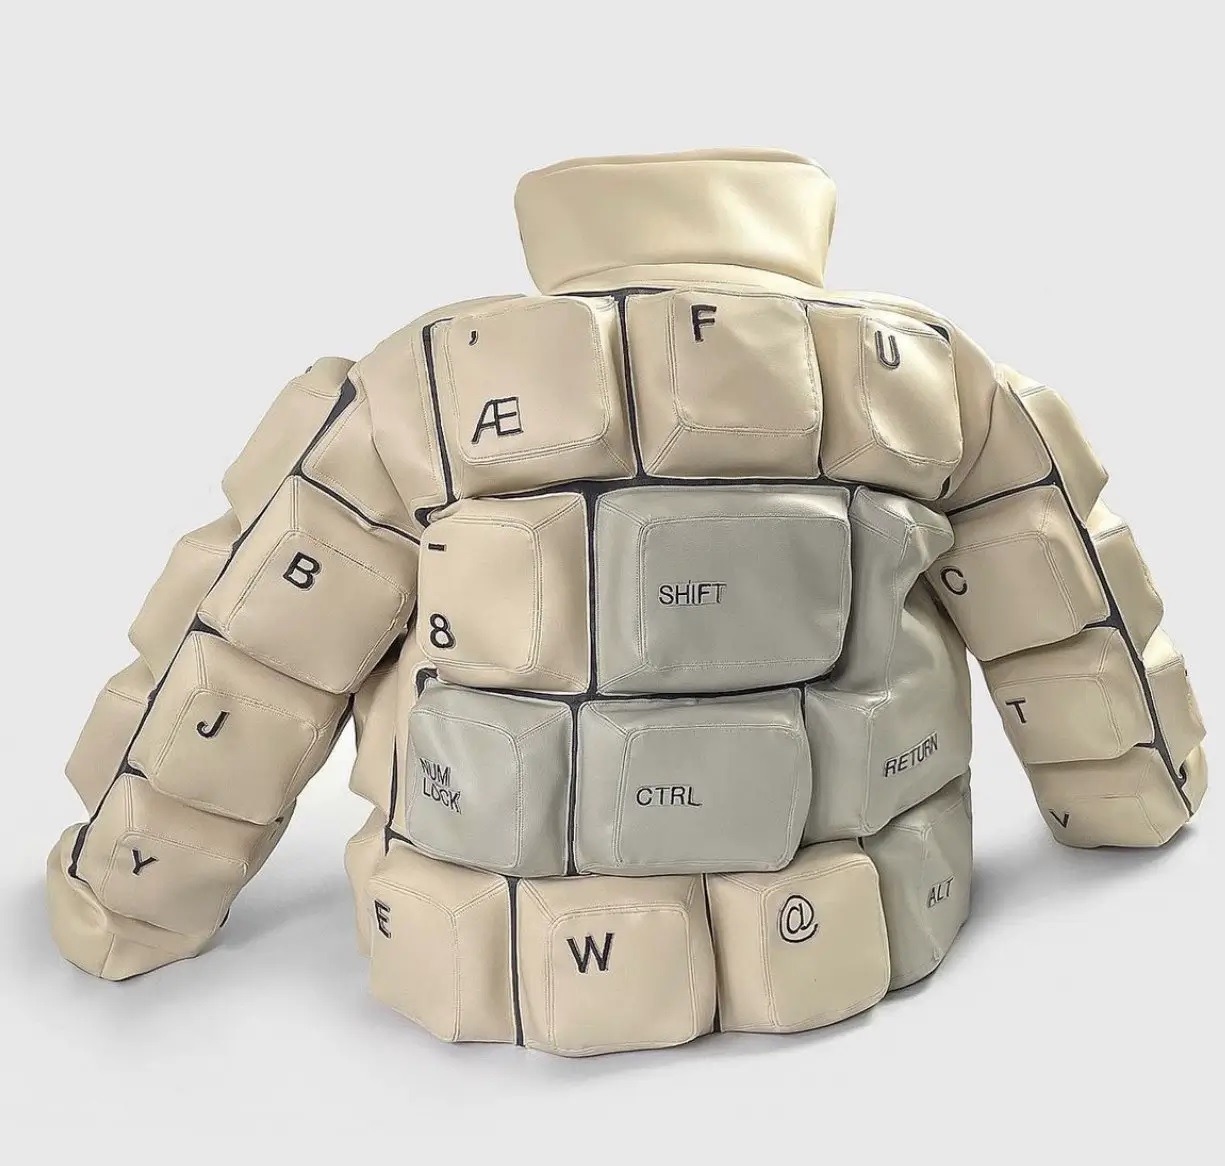 The Keyboard Puffer Jacket